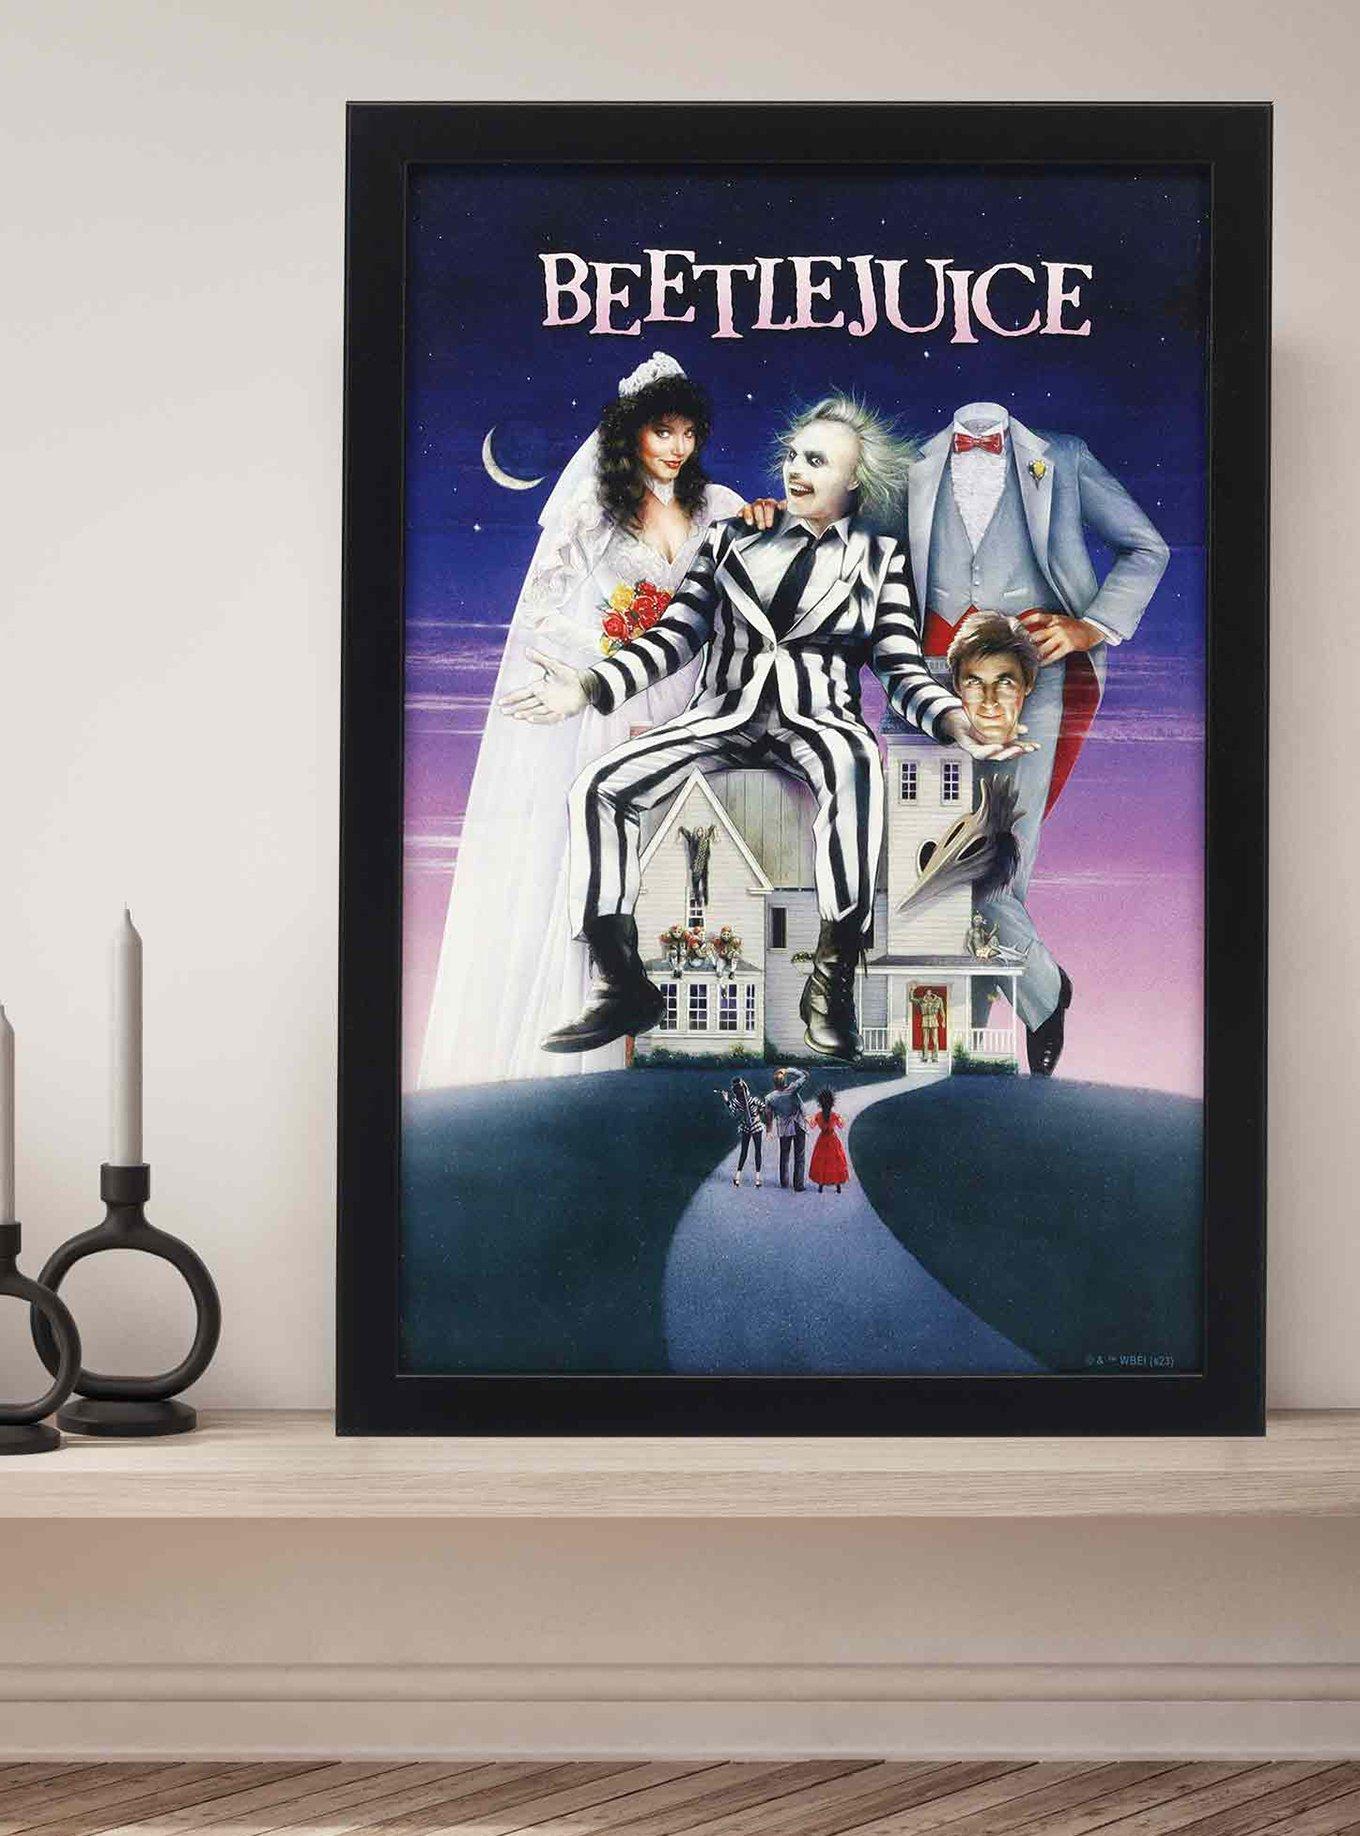 Beetlejuice Movie Poster Framed Wood Wall Decor